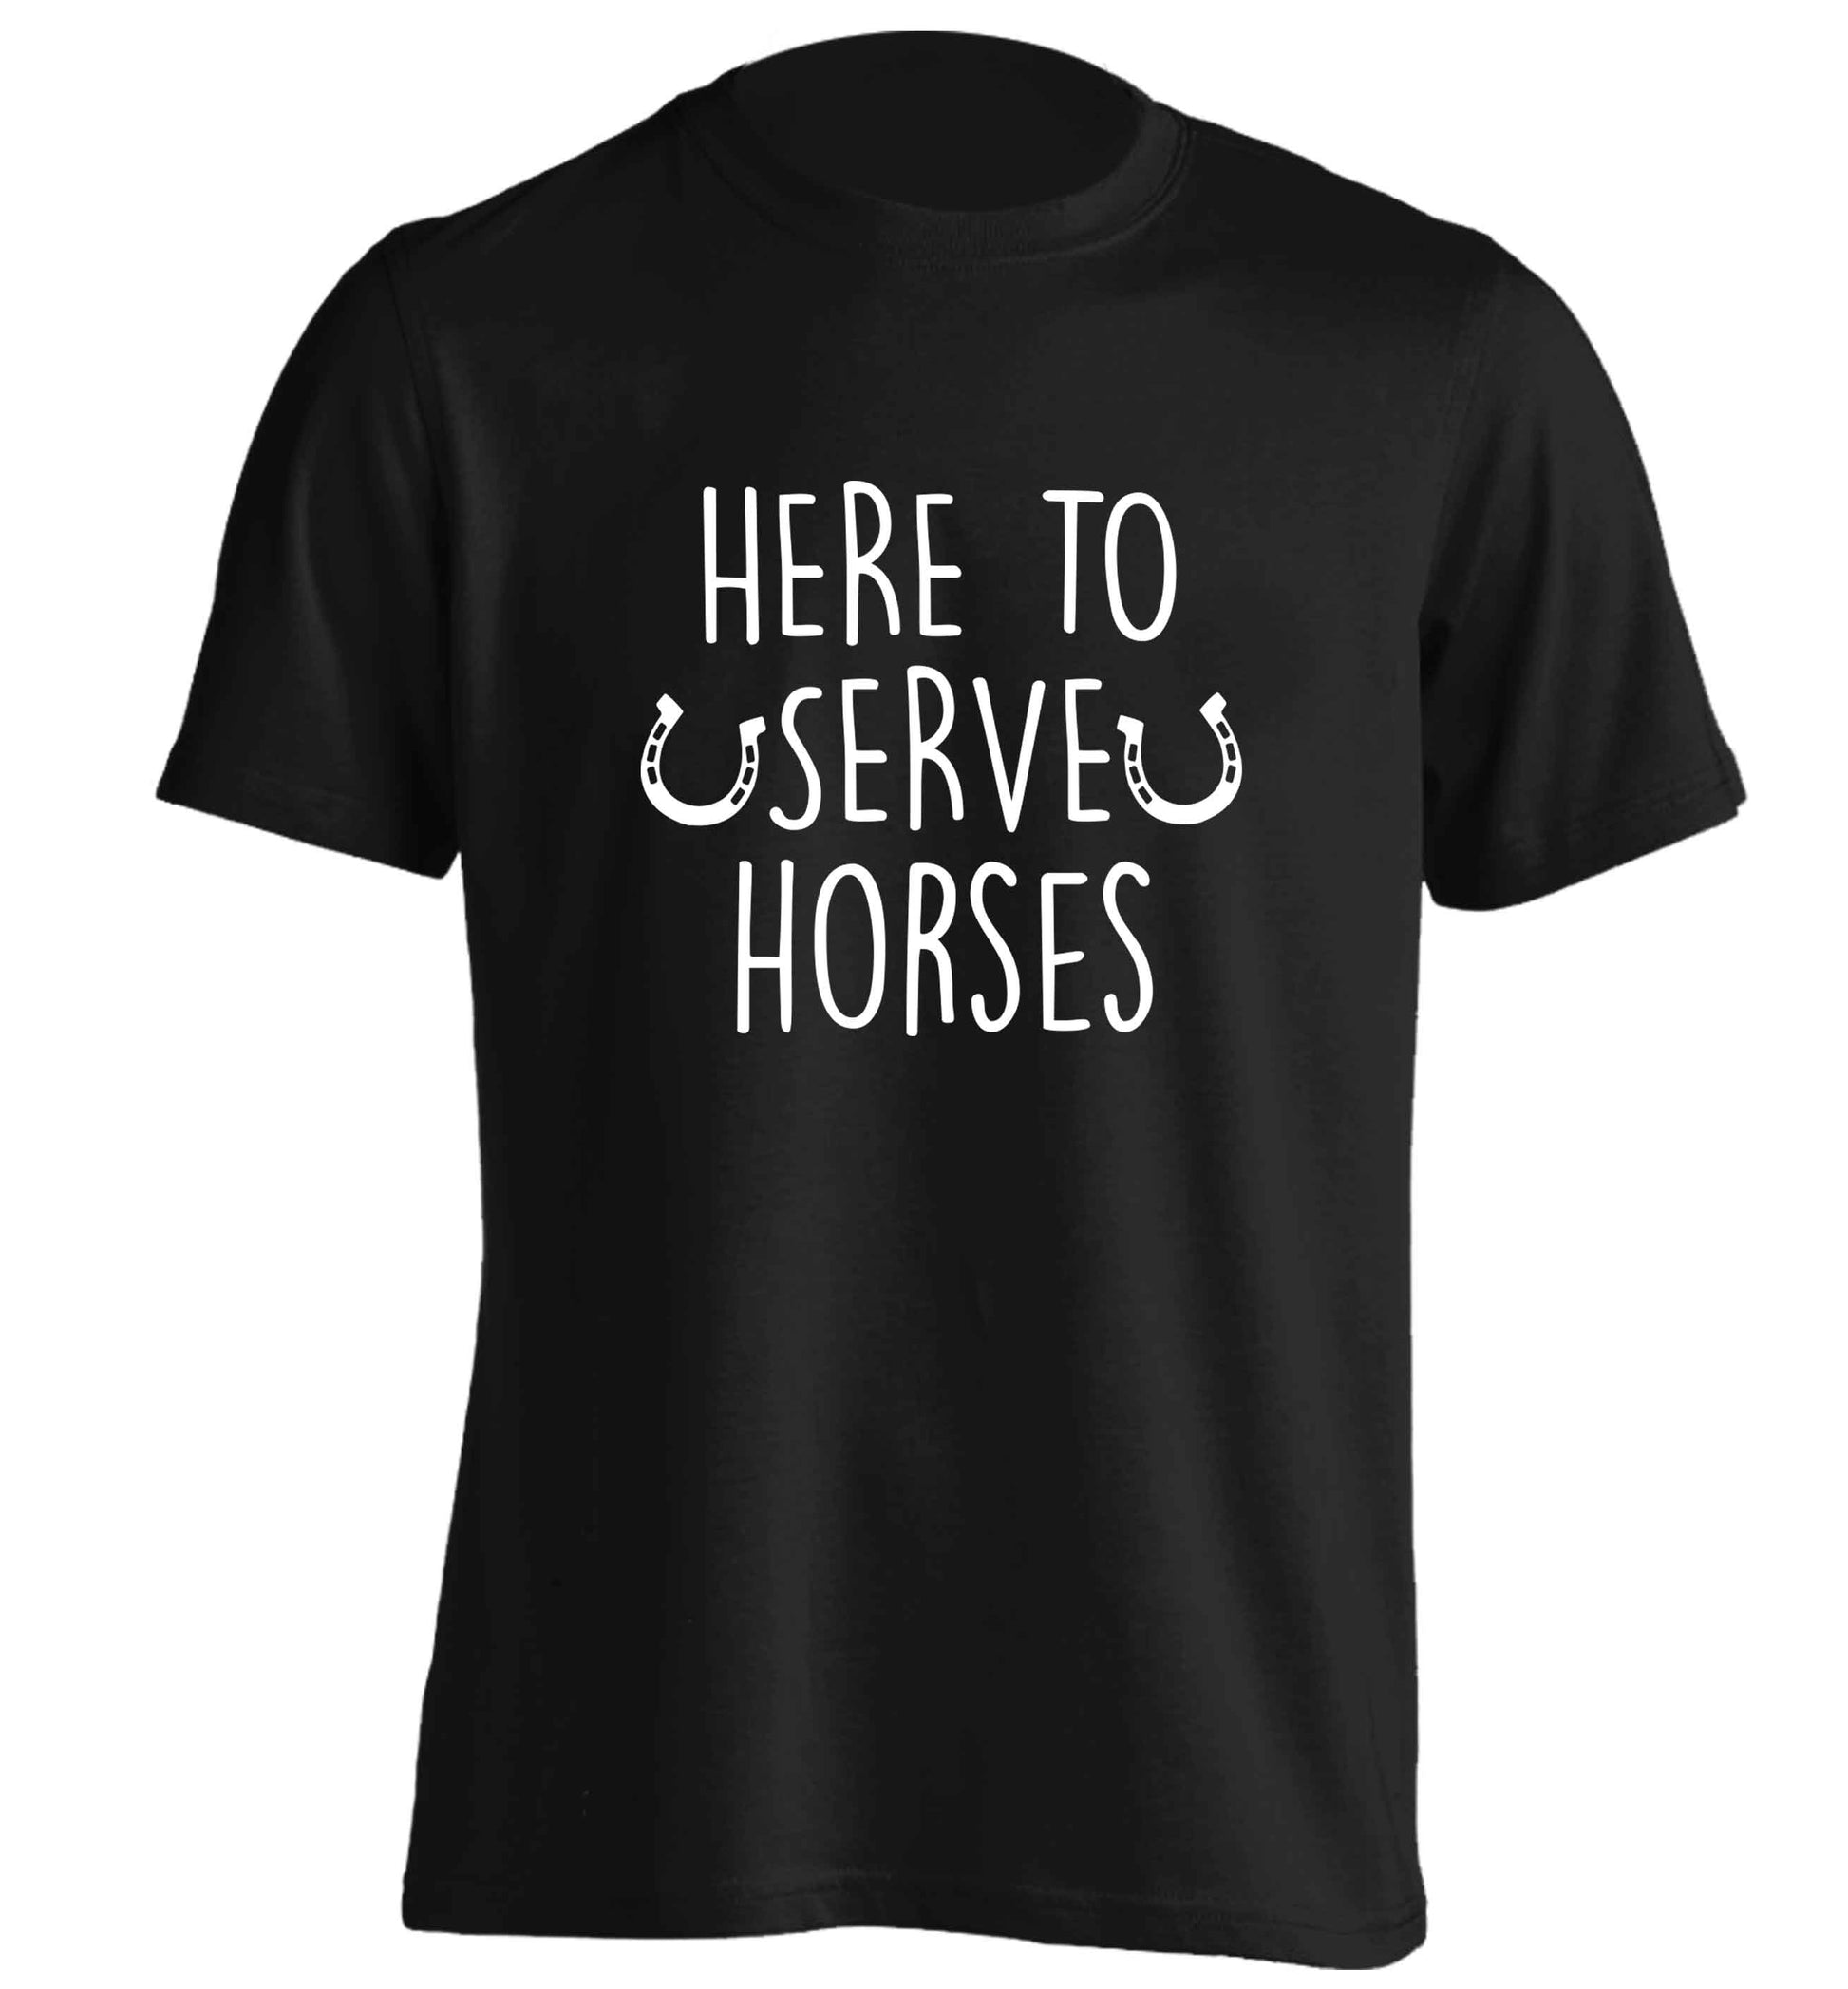 Here to serve horses adults unisex black Tshirt 2XL